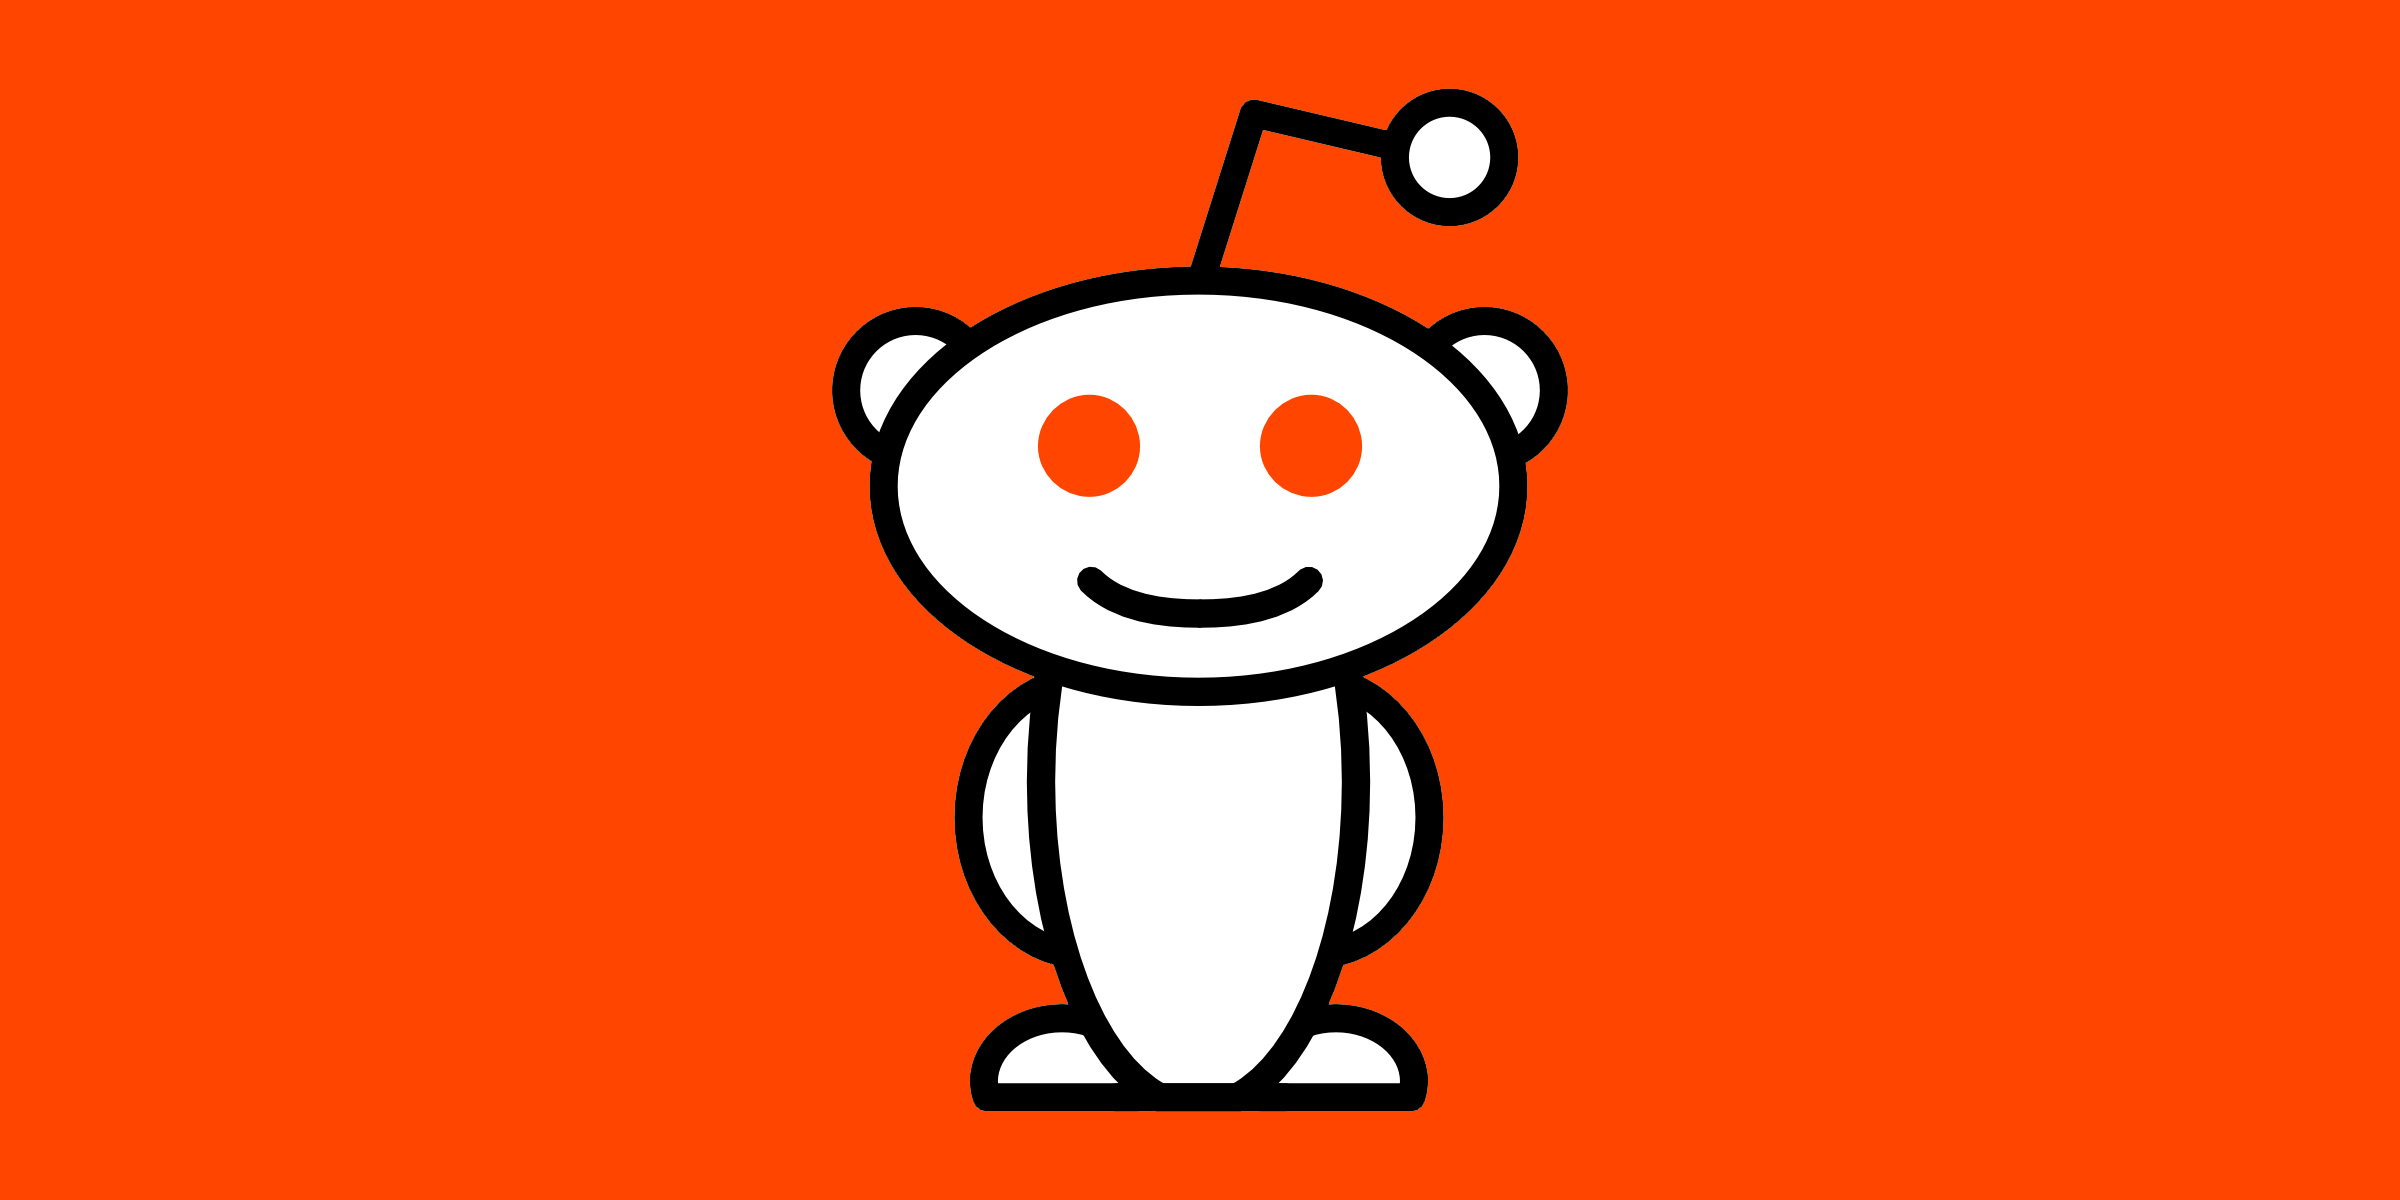 Reddit Backgrounds, Compatible - PC, Mobile, Gadgets| 2400x1200 px